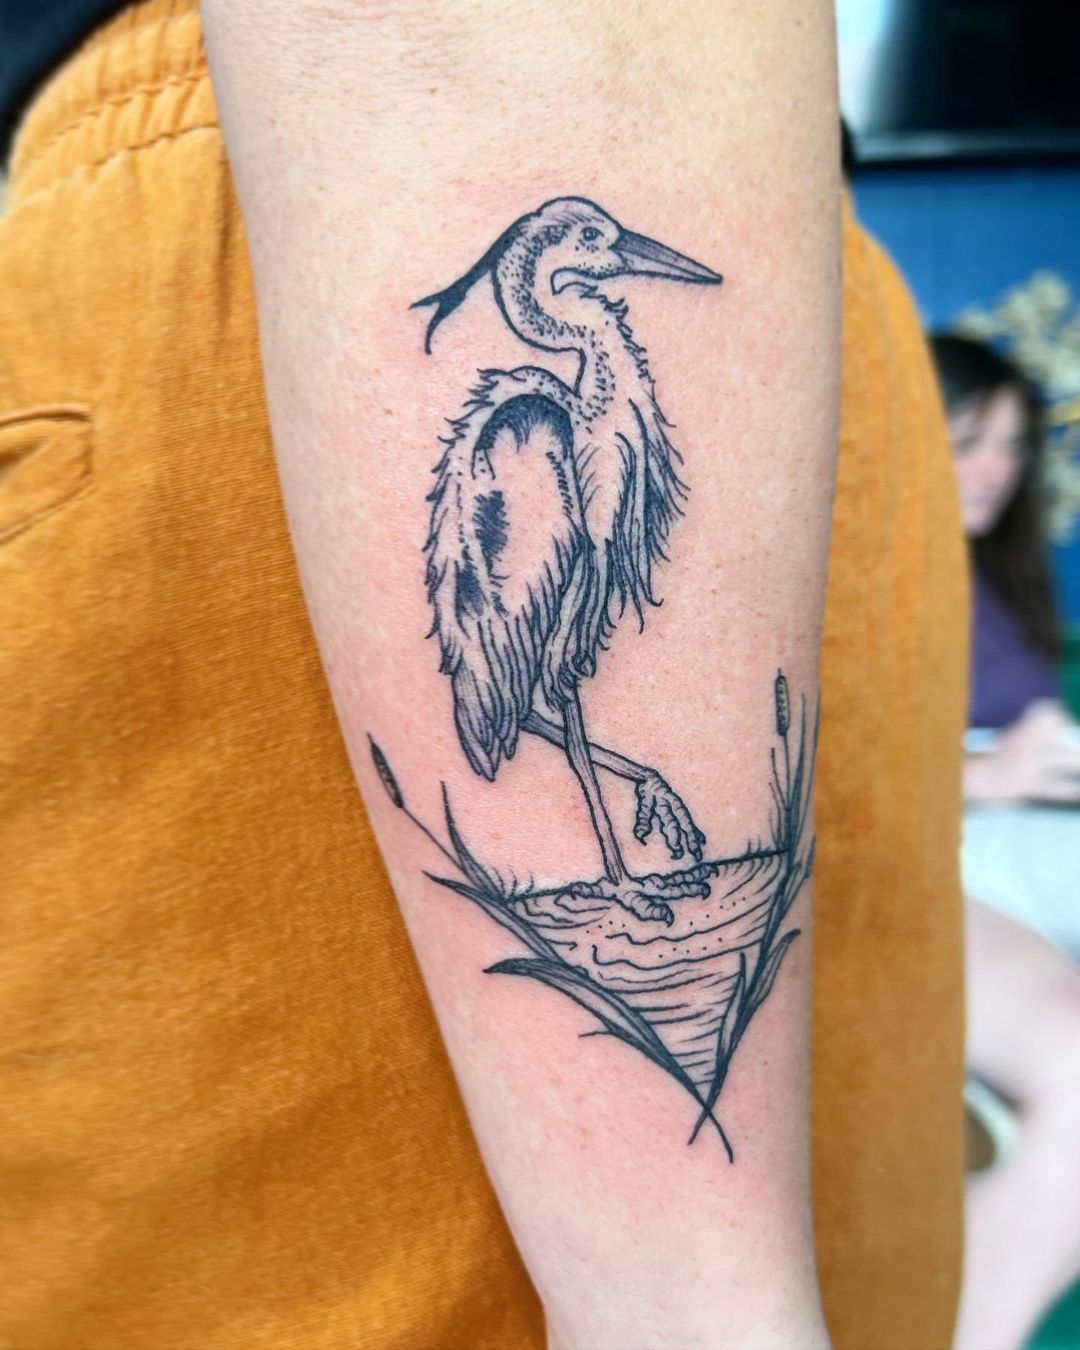 arm tattoo of a pelicumn